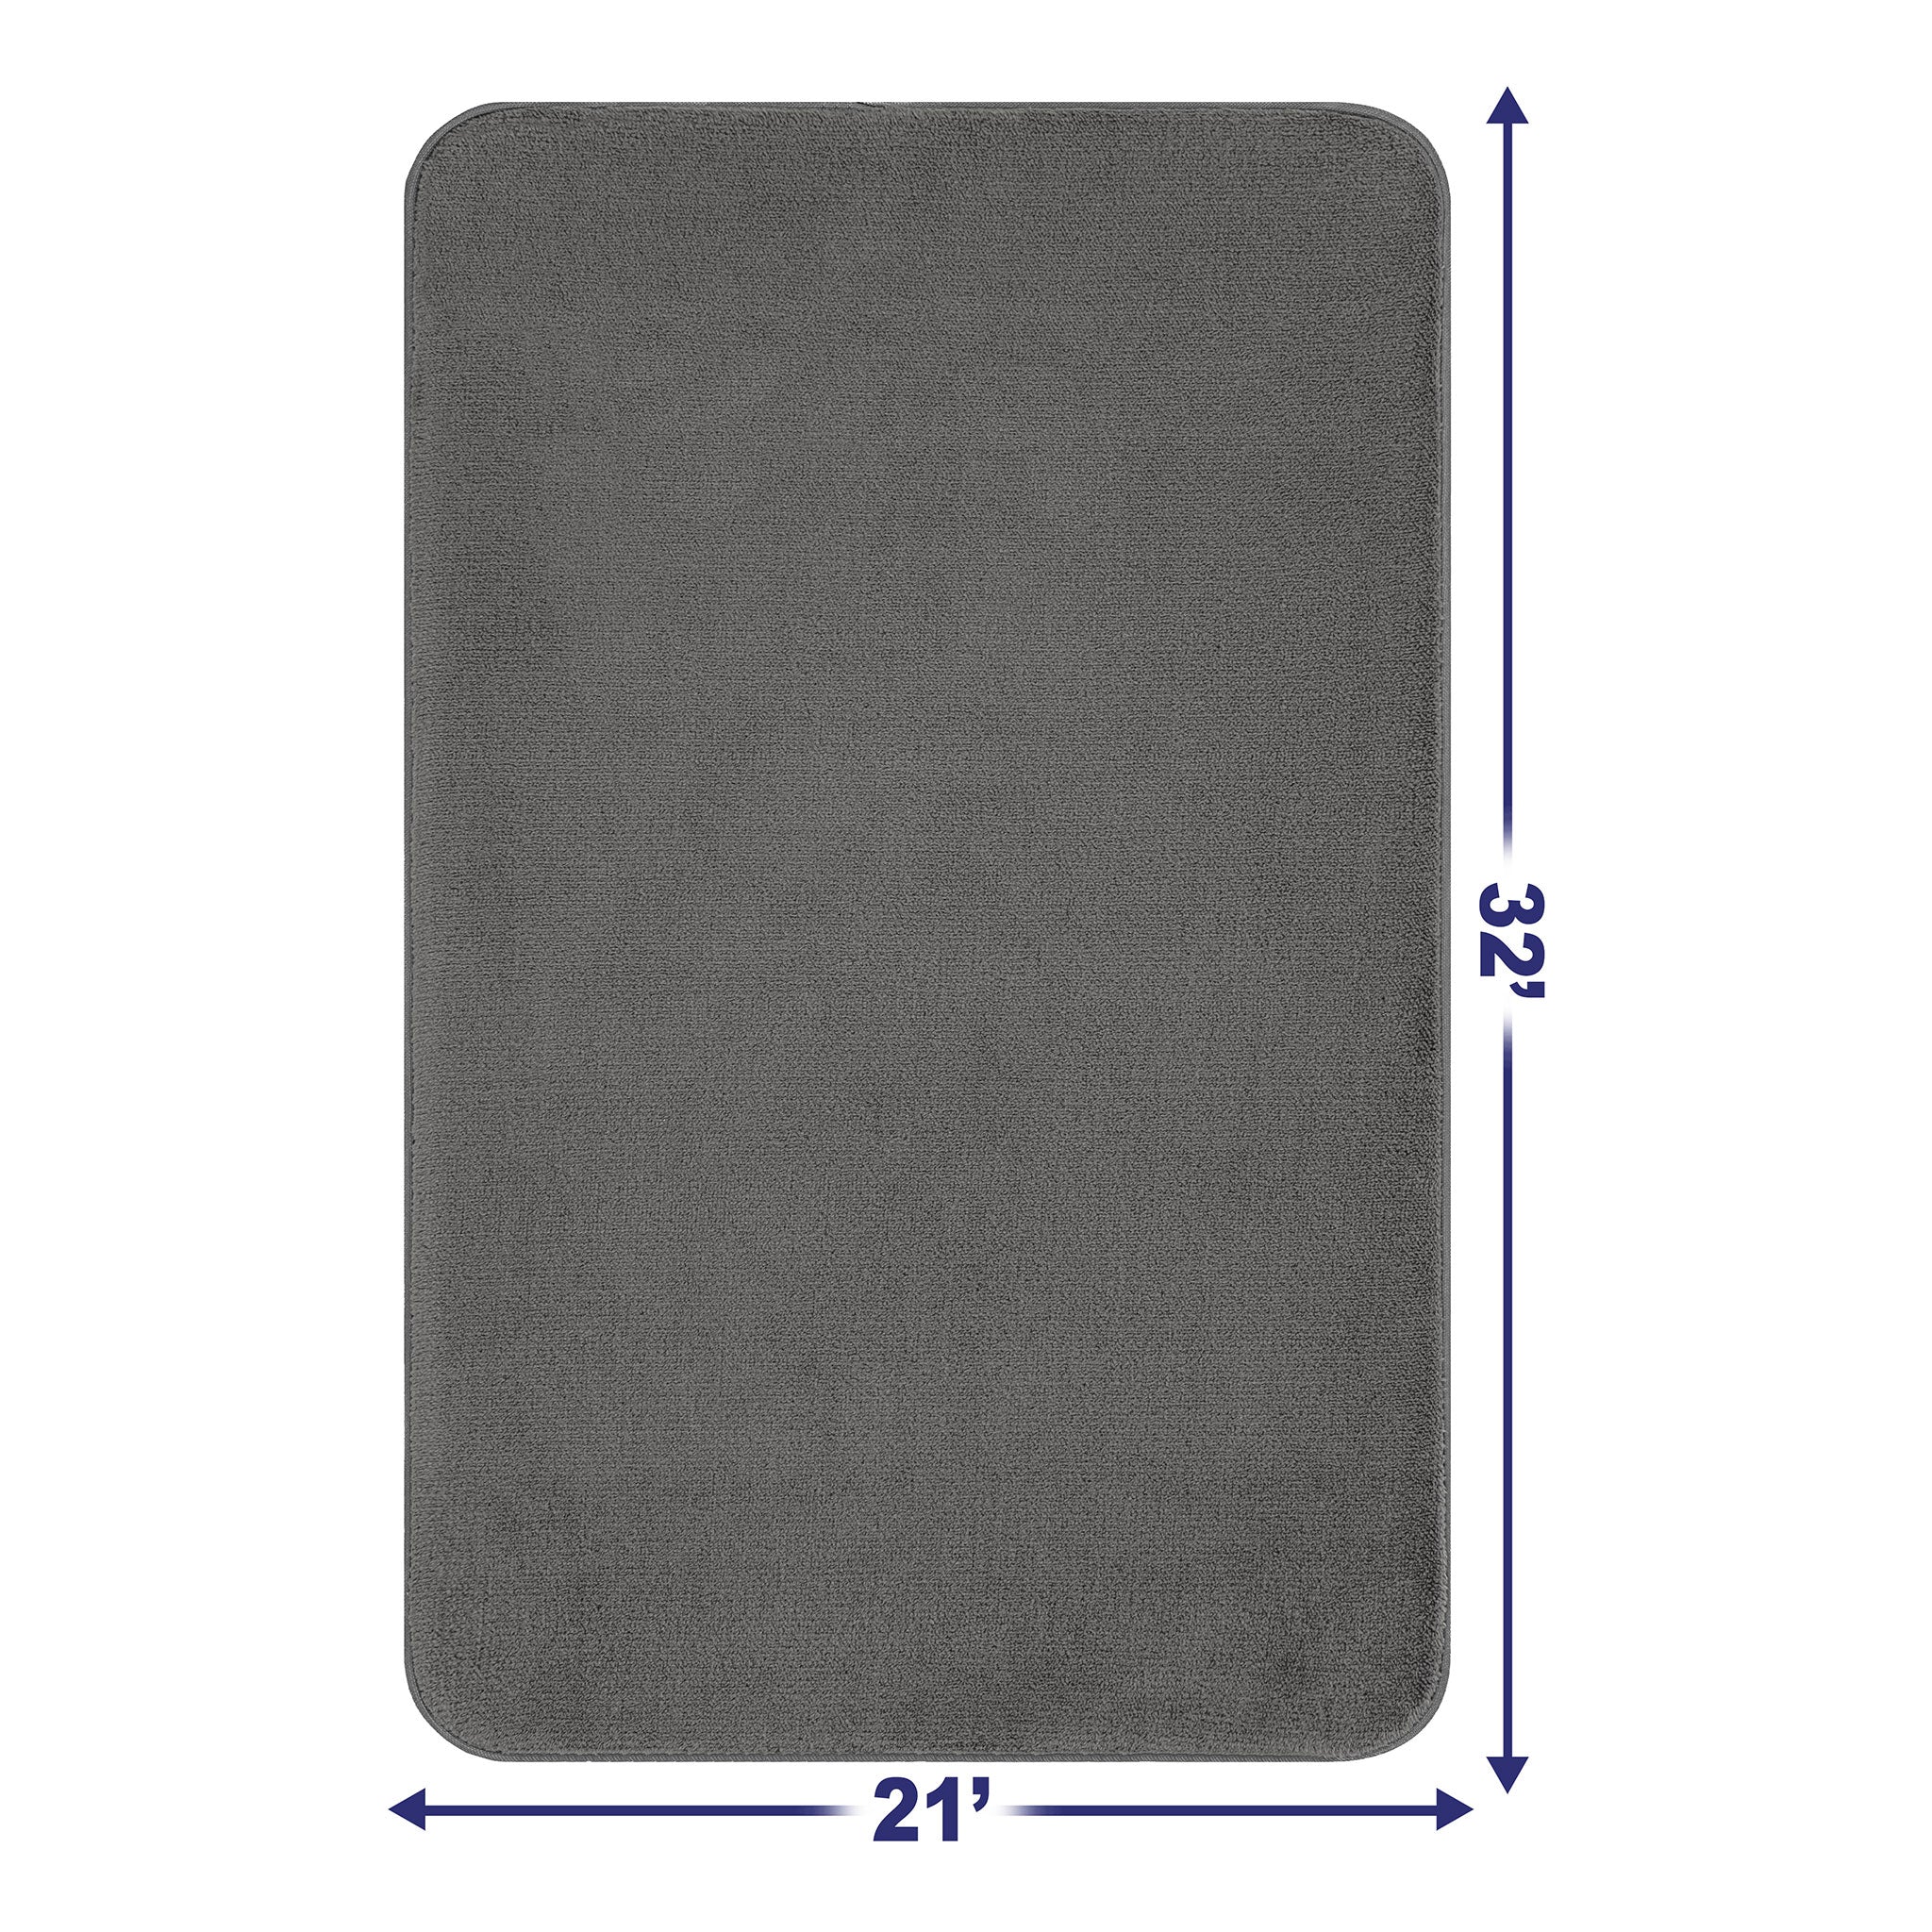 American Soft Linen - Fluffy Foamed Non-Slip Bath Rug 21x32 Inch -  18 Set Case Pack - Gray - 3